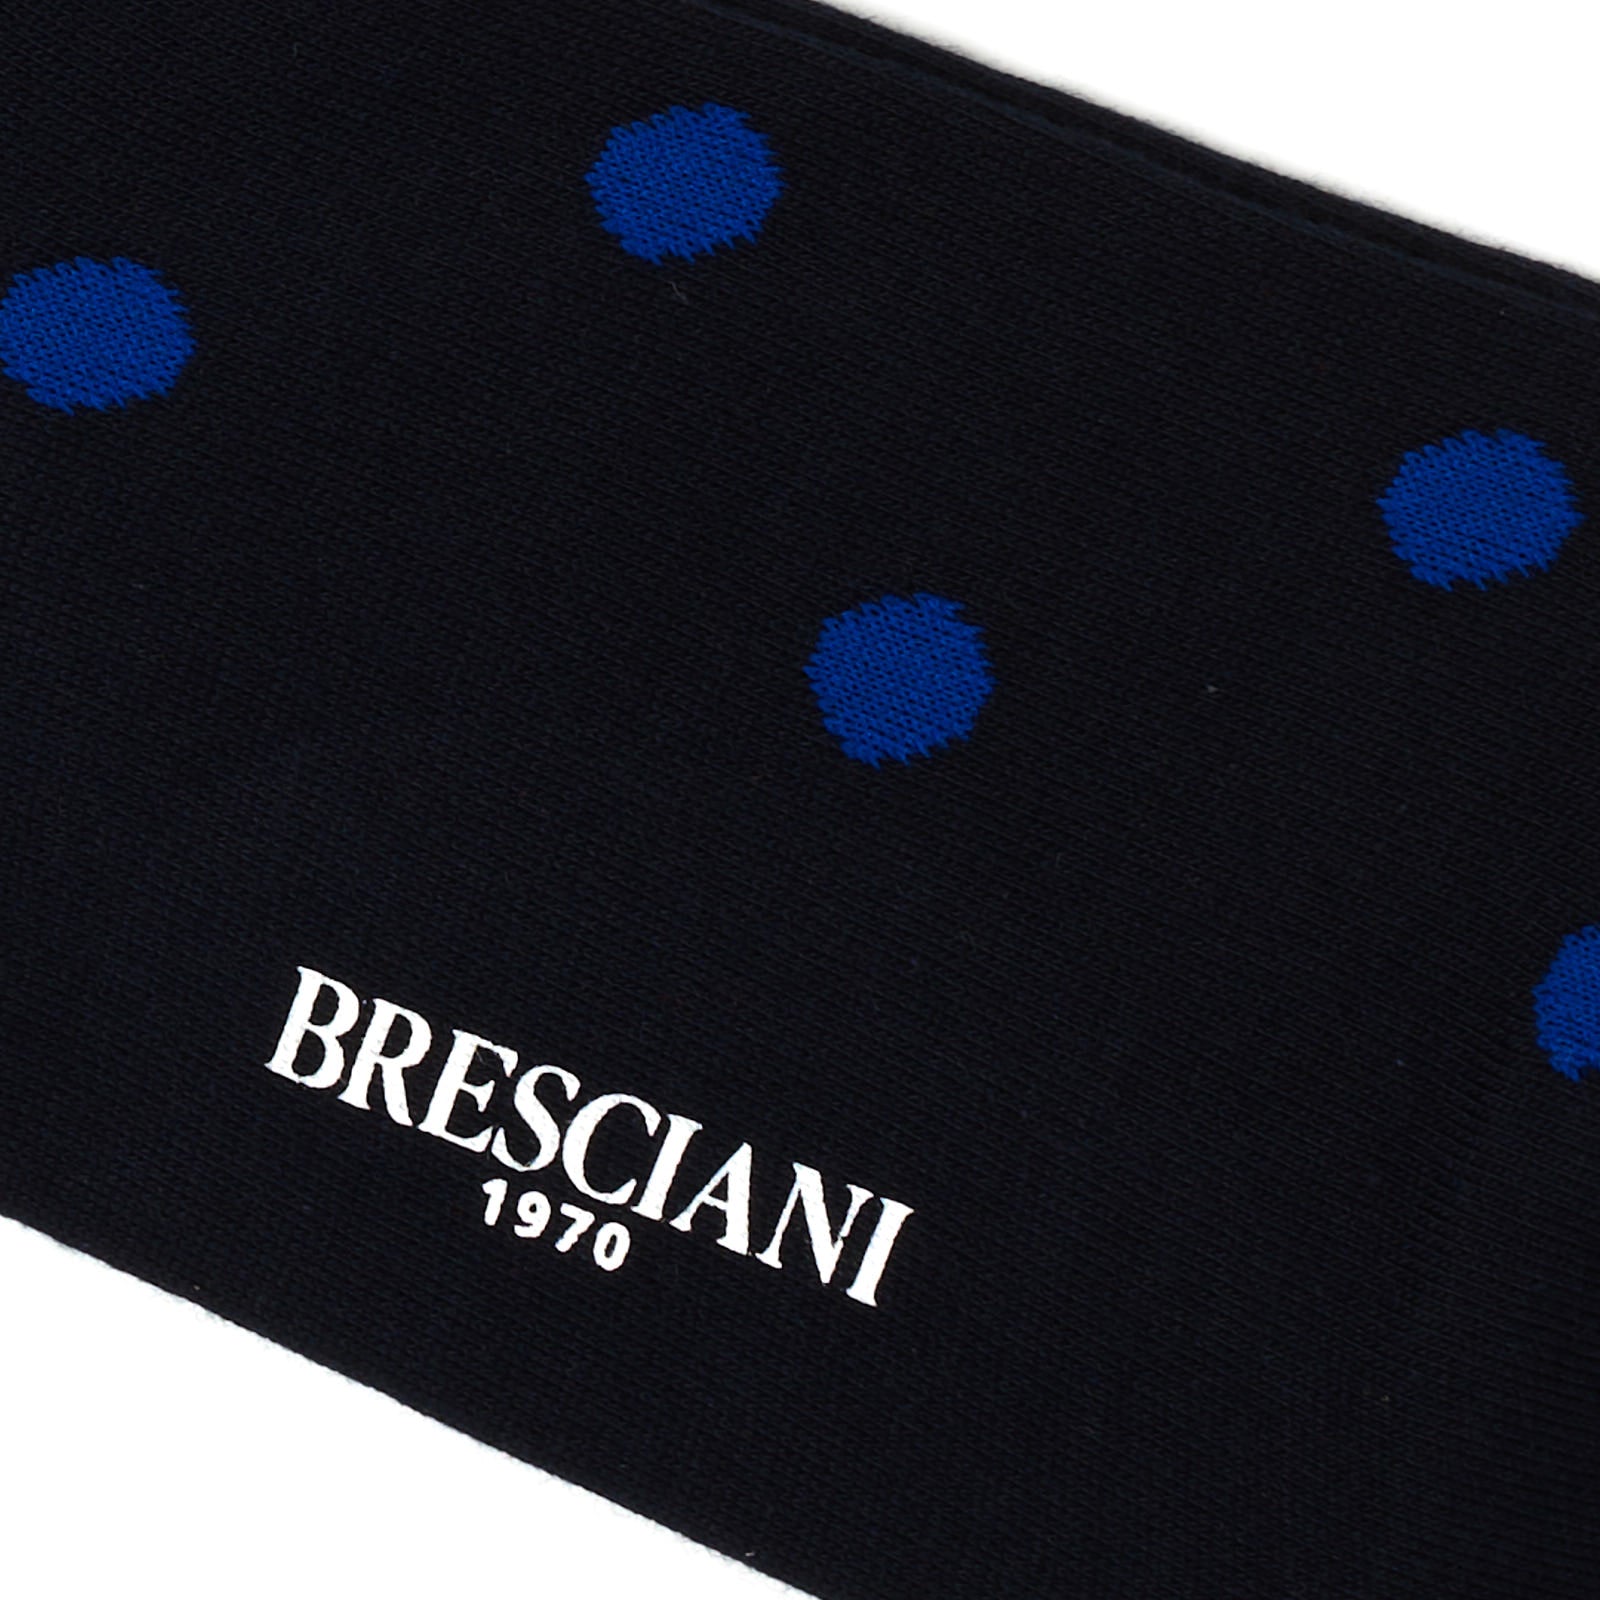 BRESCIANI Cotton Geometry Pattern Design Mid Calf Length Socks US M-L